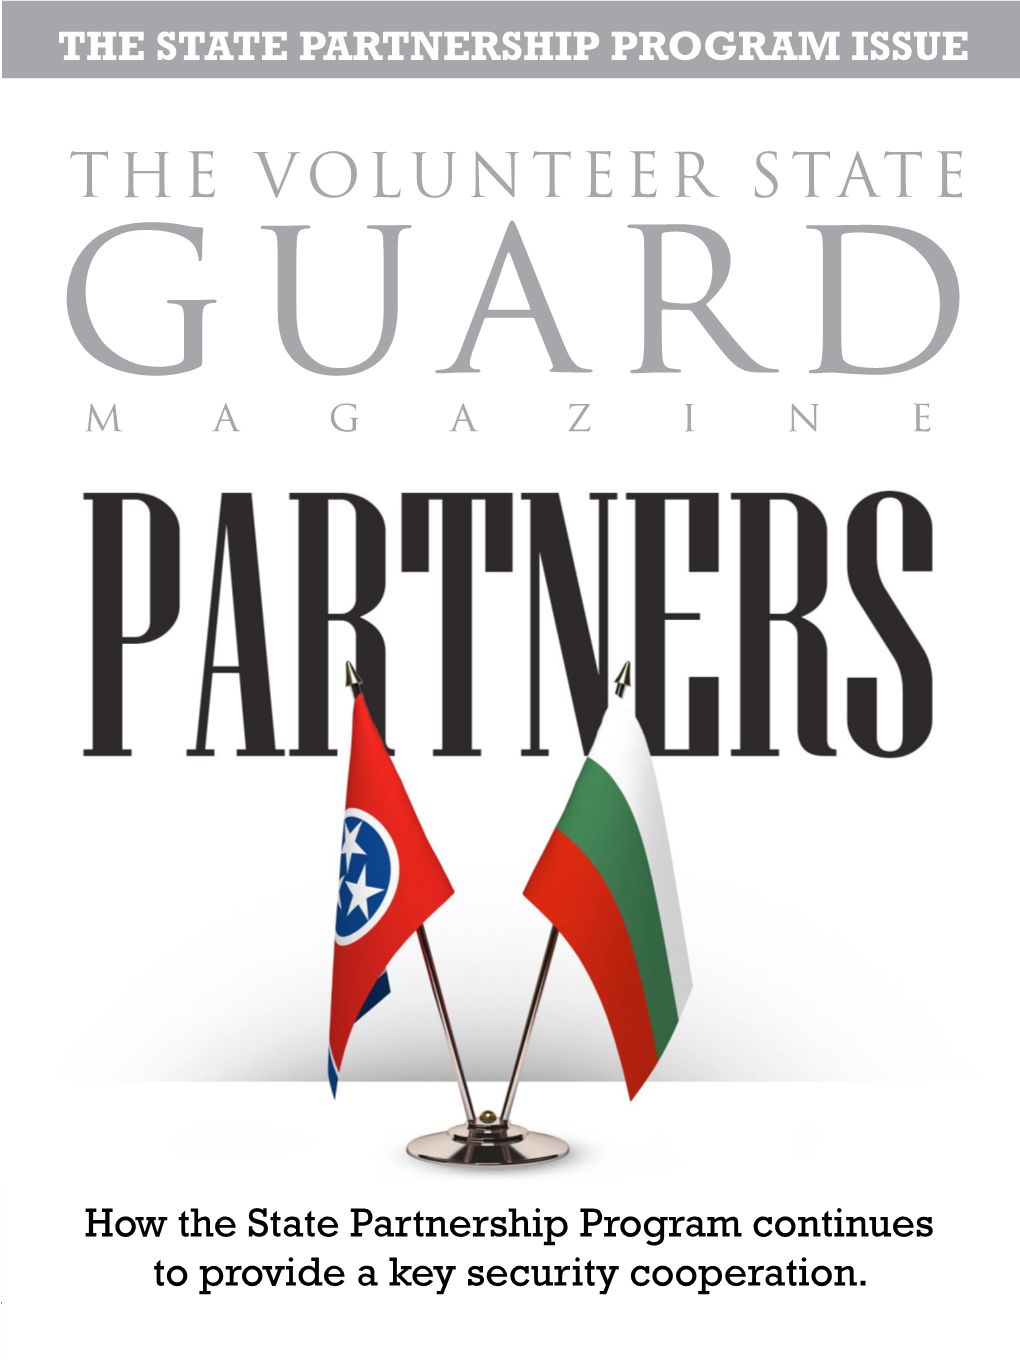 THE VOLUNTEER STATE Guard Magazine